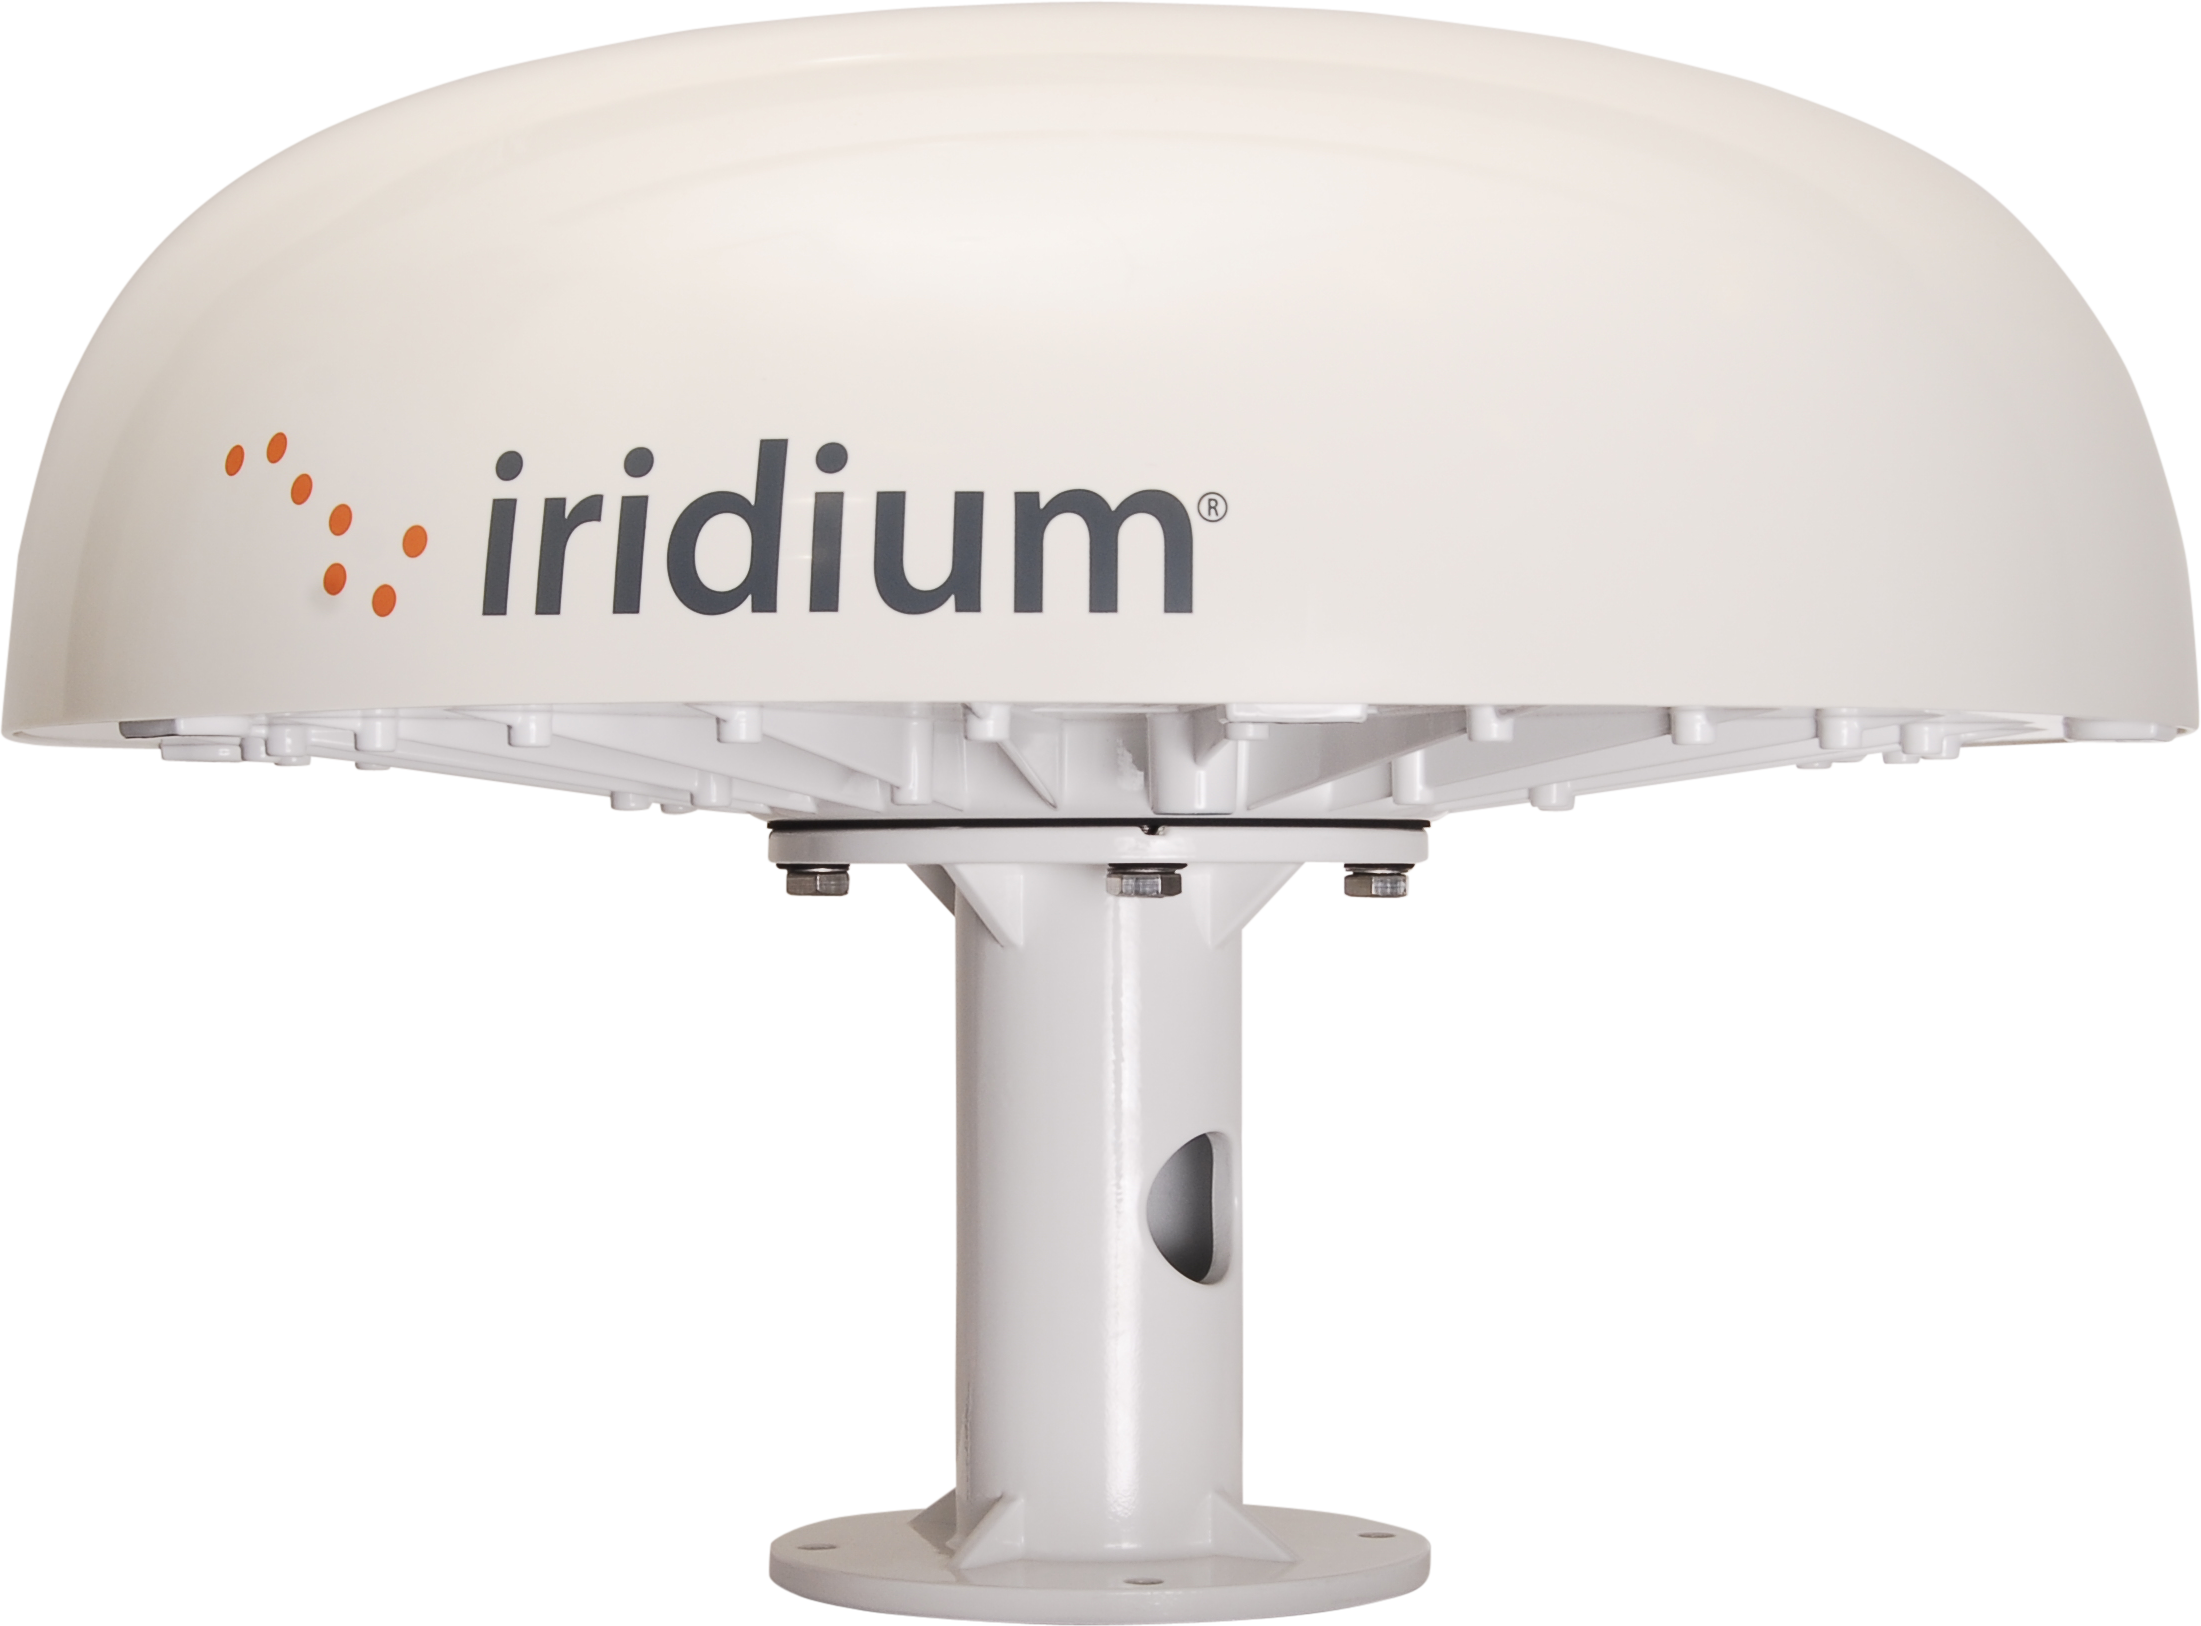 Iridium Pilot Product Image